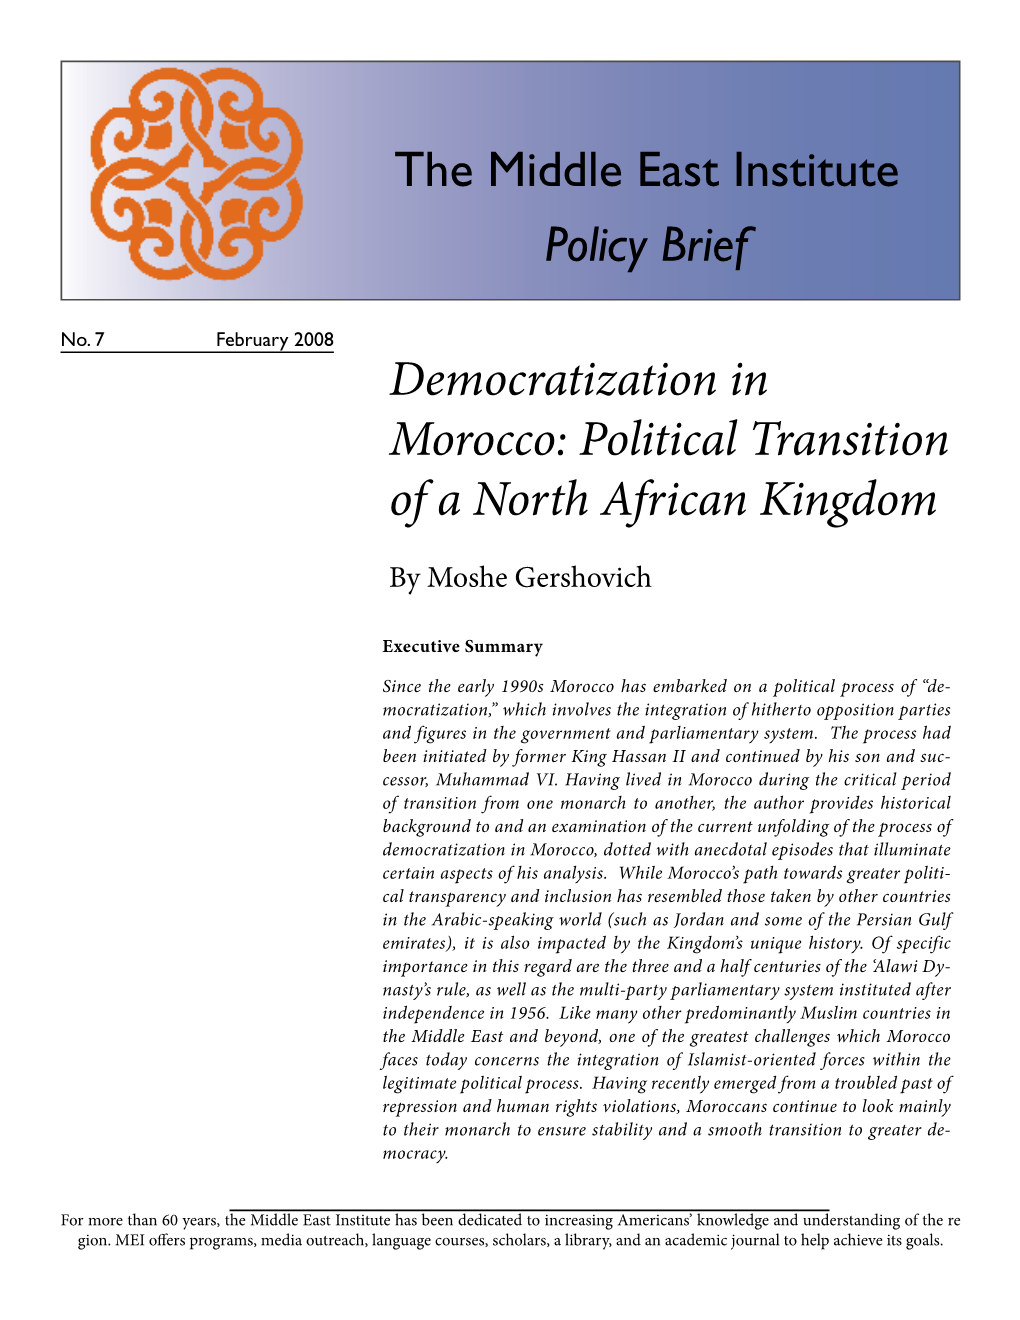 Democratization in Morocco: Political Transition of a North African Kingdom